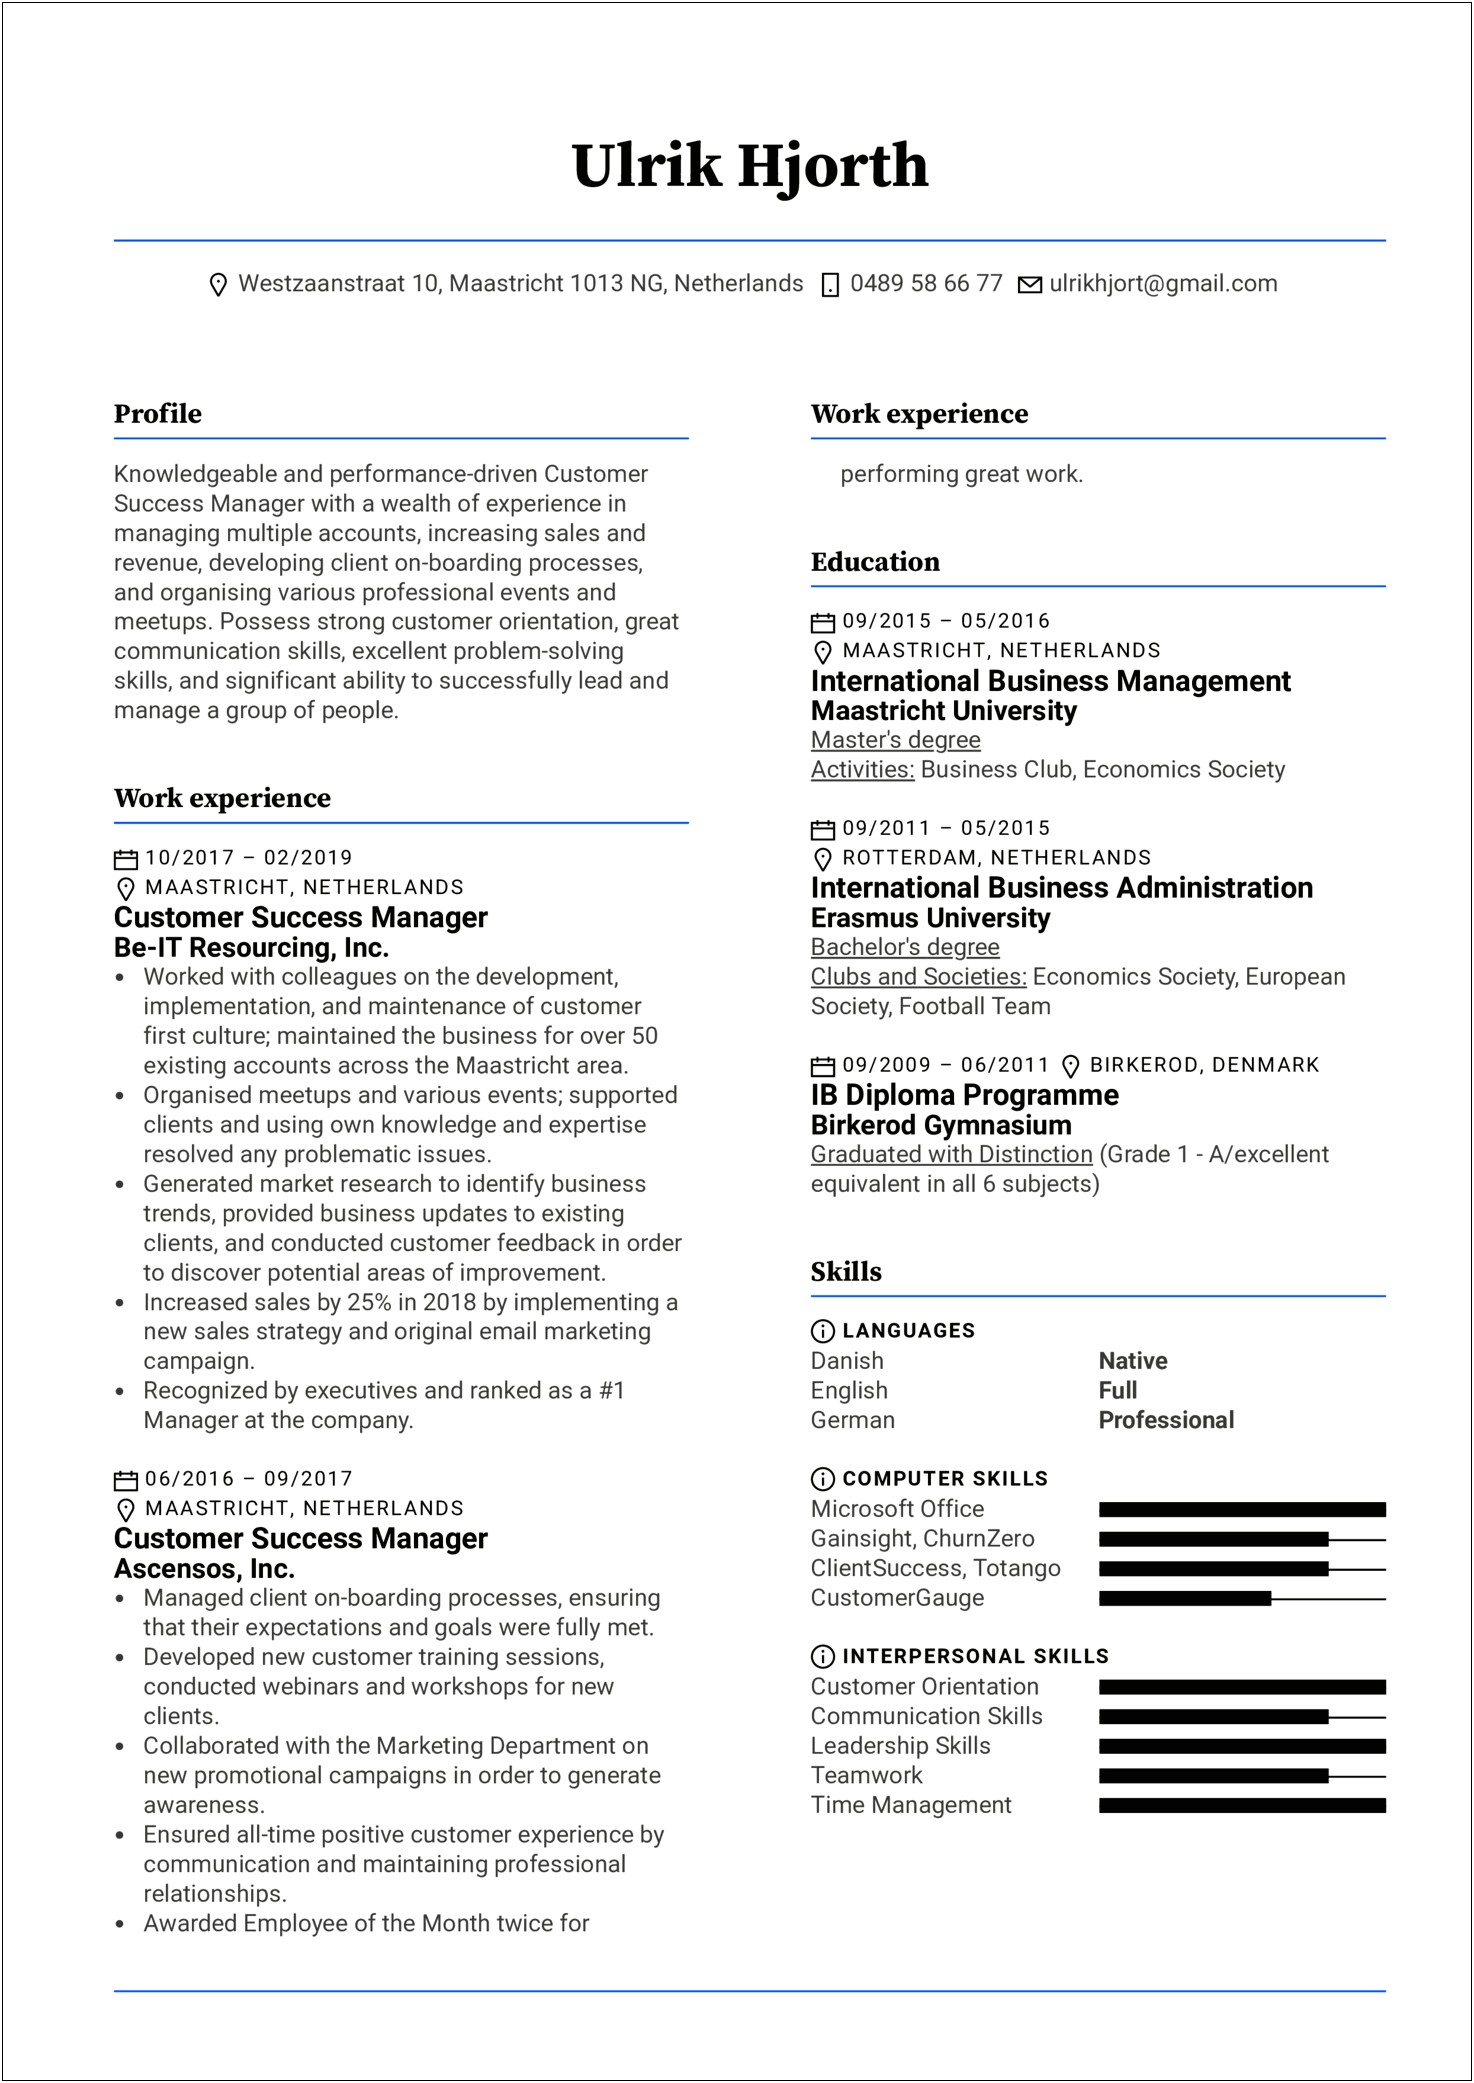 Resume Format For Customer Relationship Manager